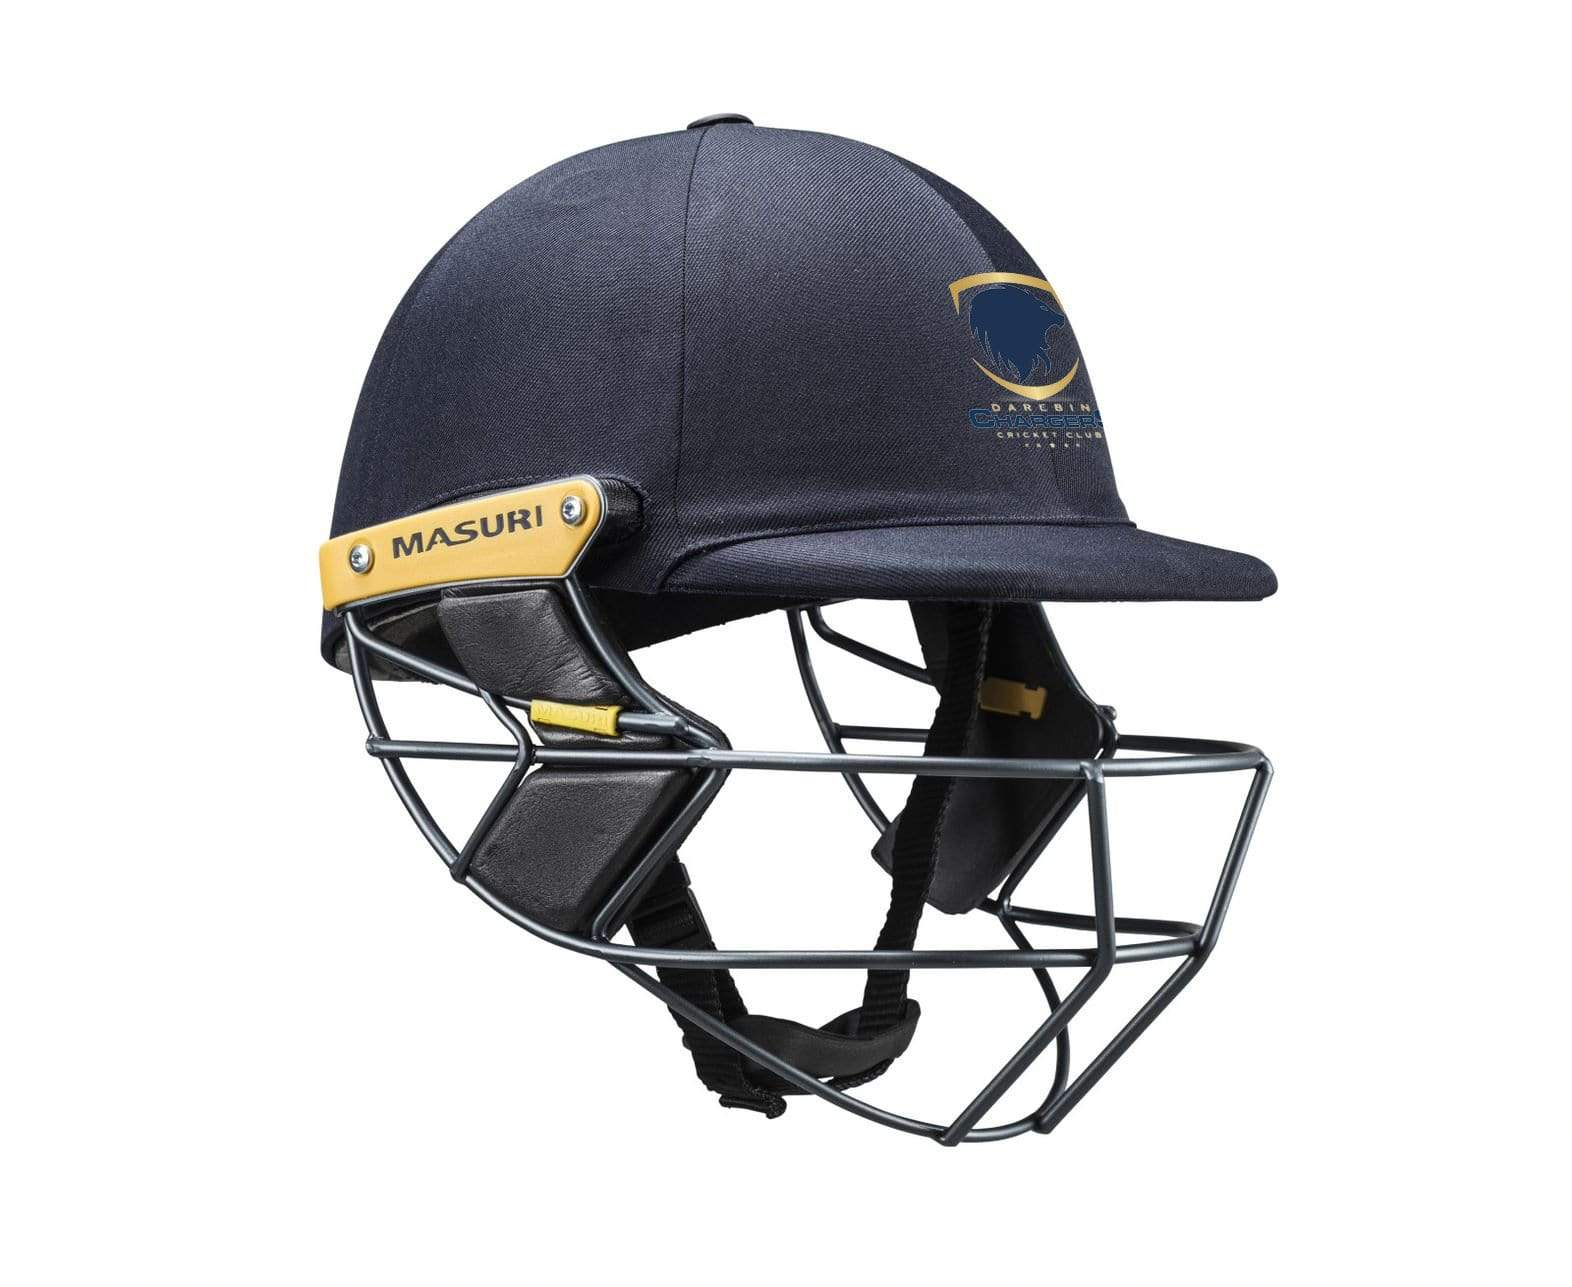 Masuri Club Helmet Darebin Chargers Cricket Club Helmet